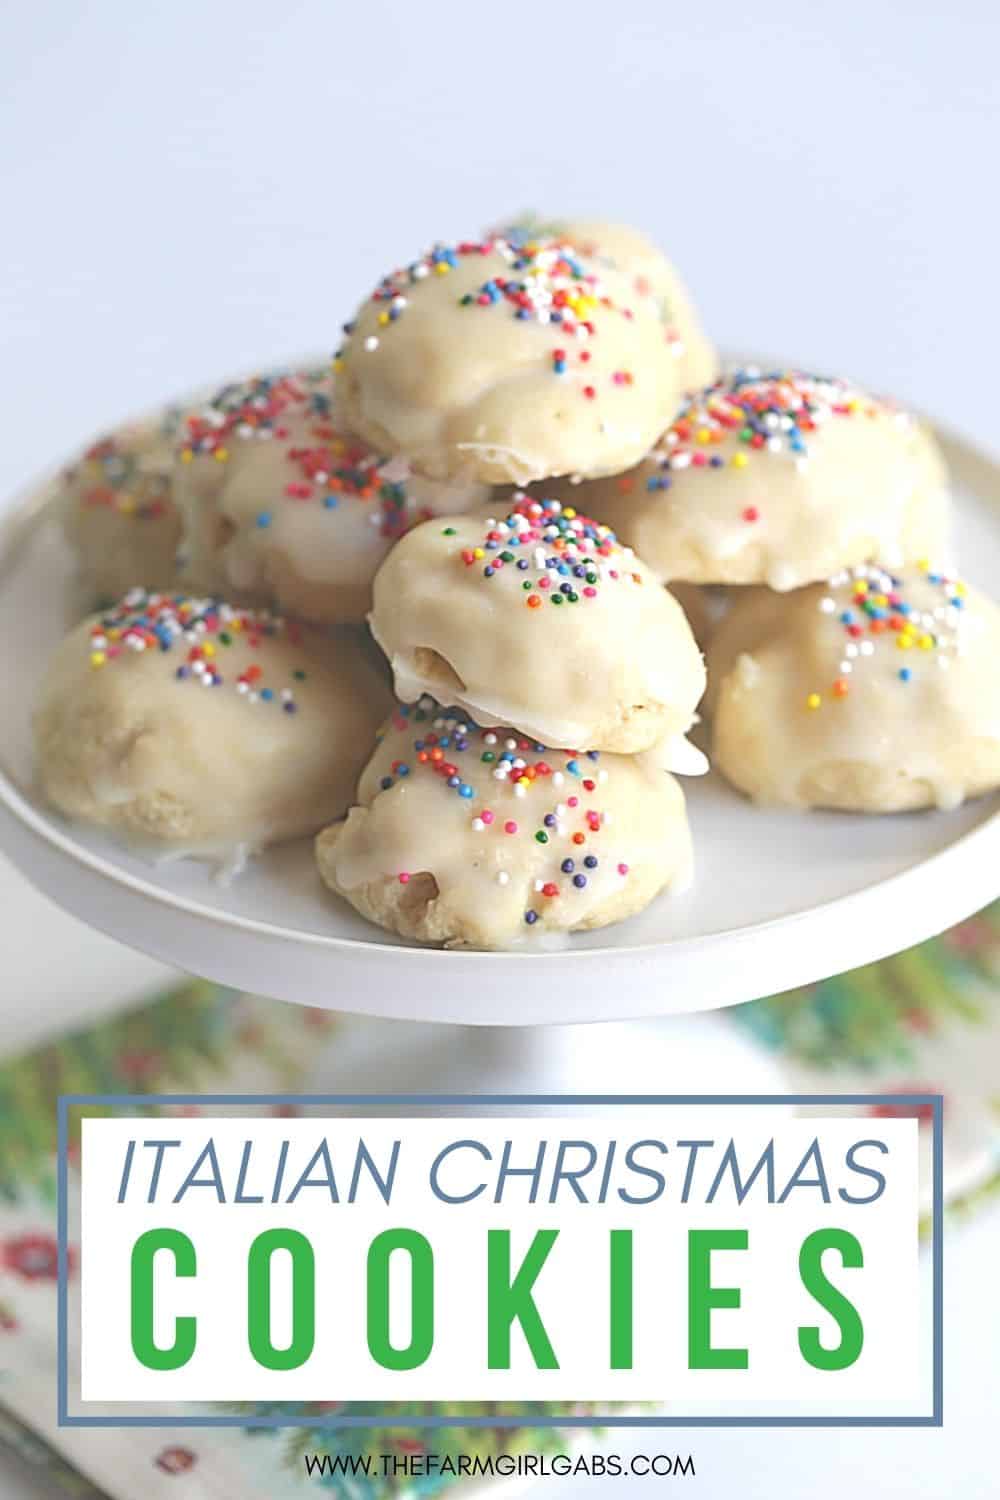 Italian Christmas Cookies - The Farm Girl Gabs®